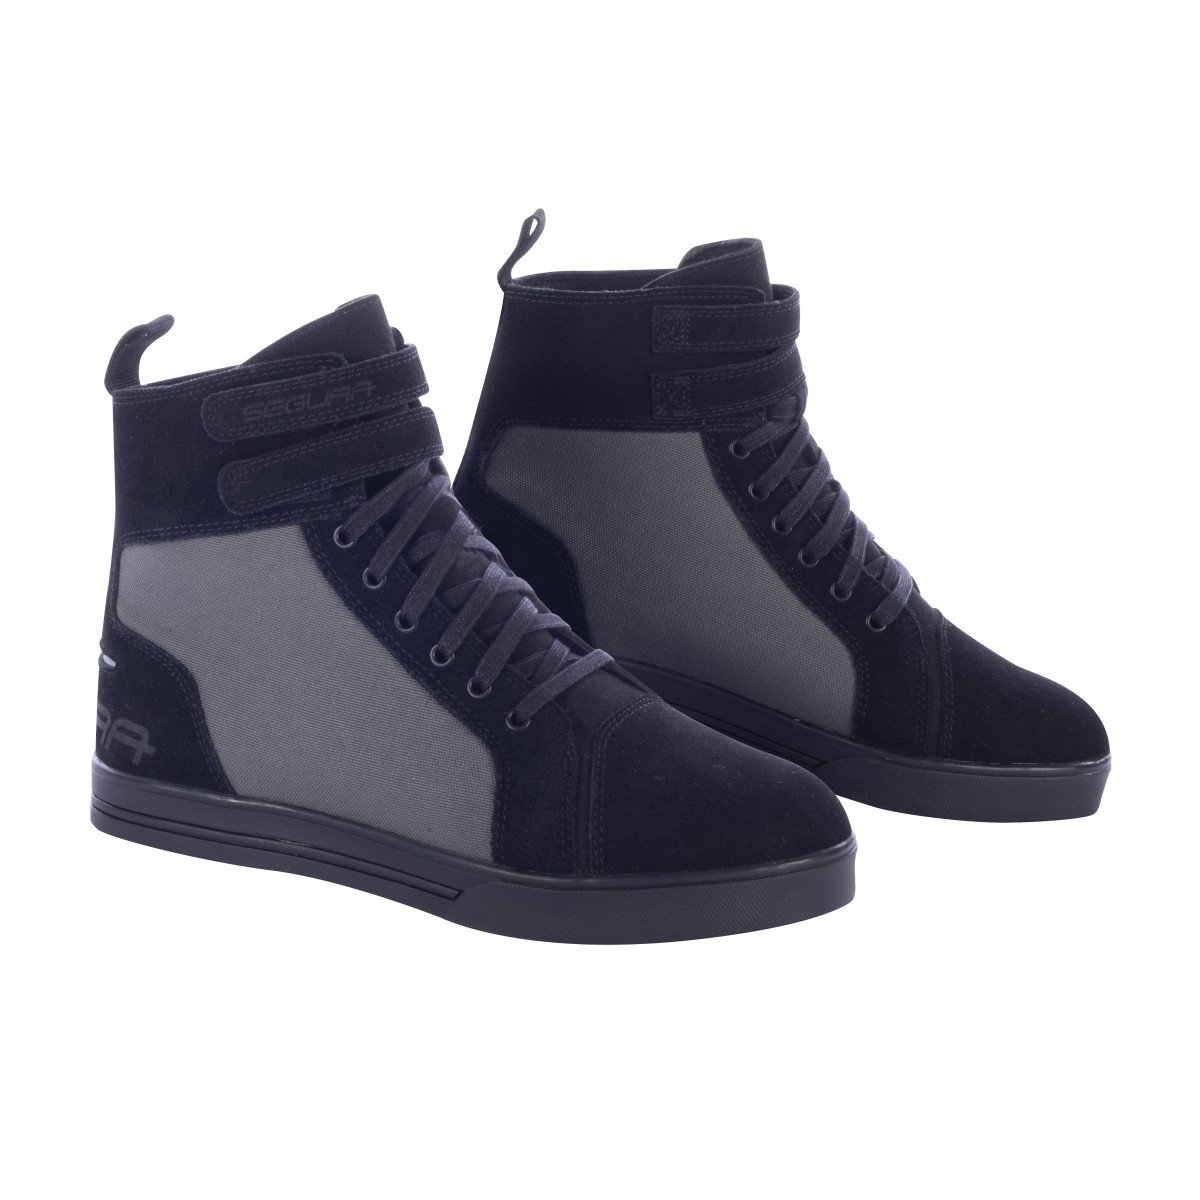 Image of Segura Sneakers Contact Black Grey Size 43 EN